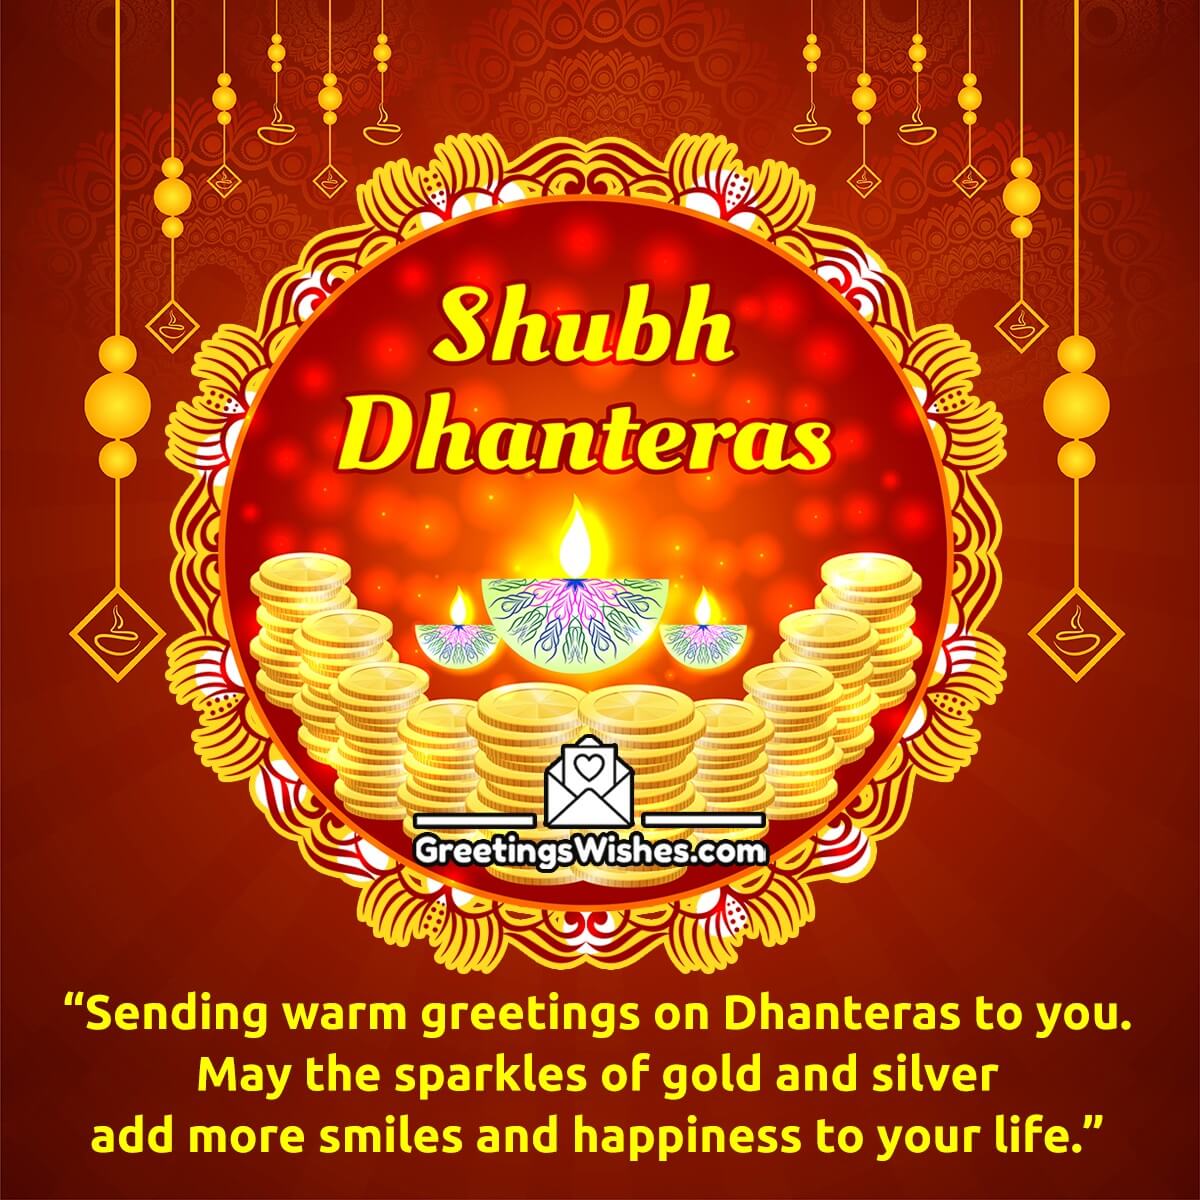 Shubh Dhanteras Greetings